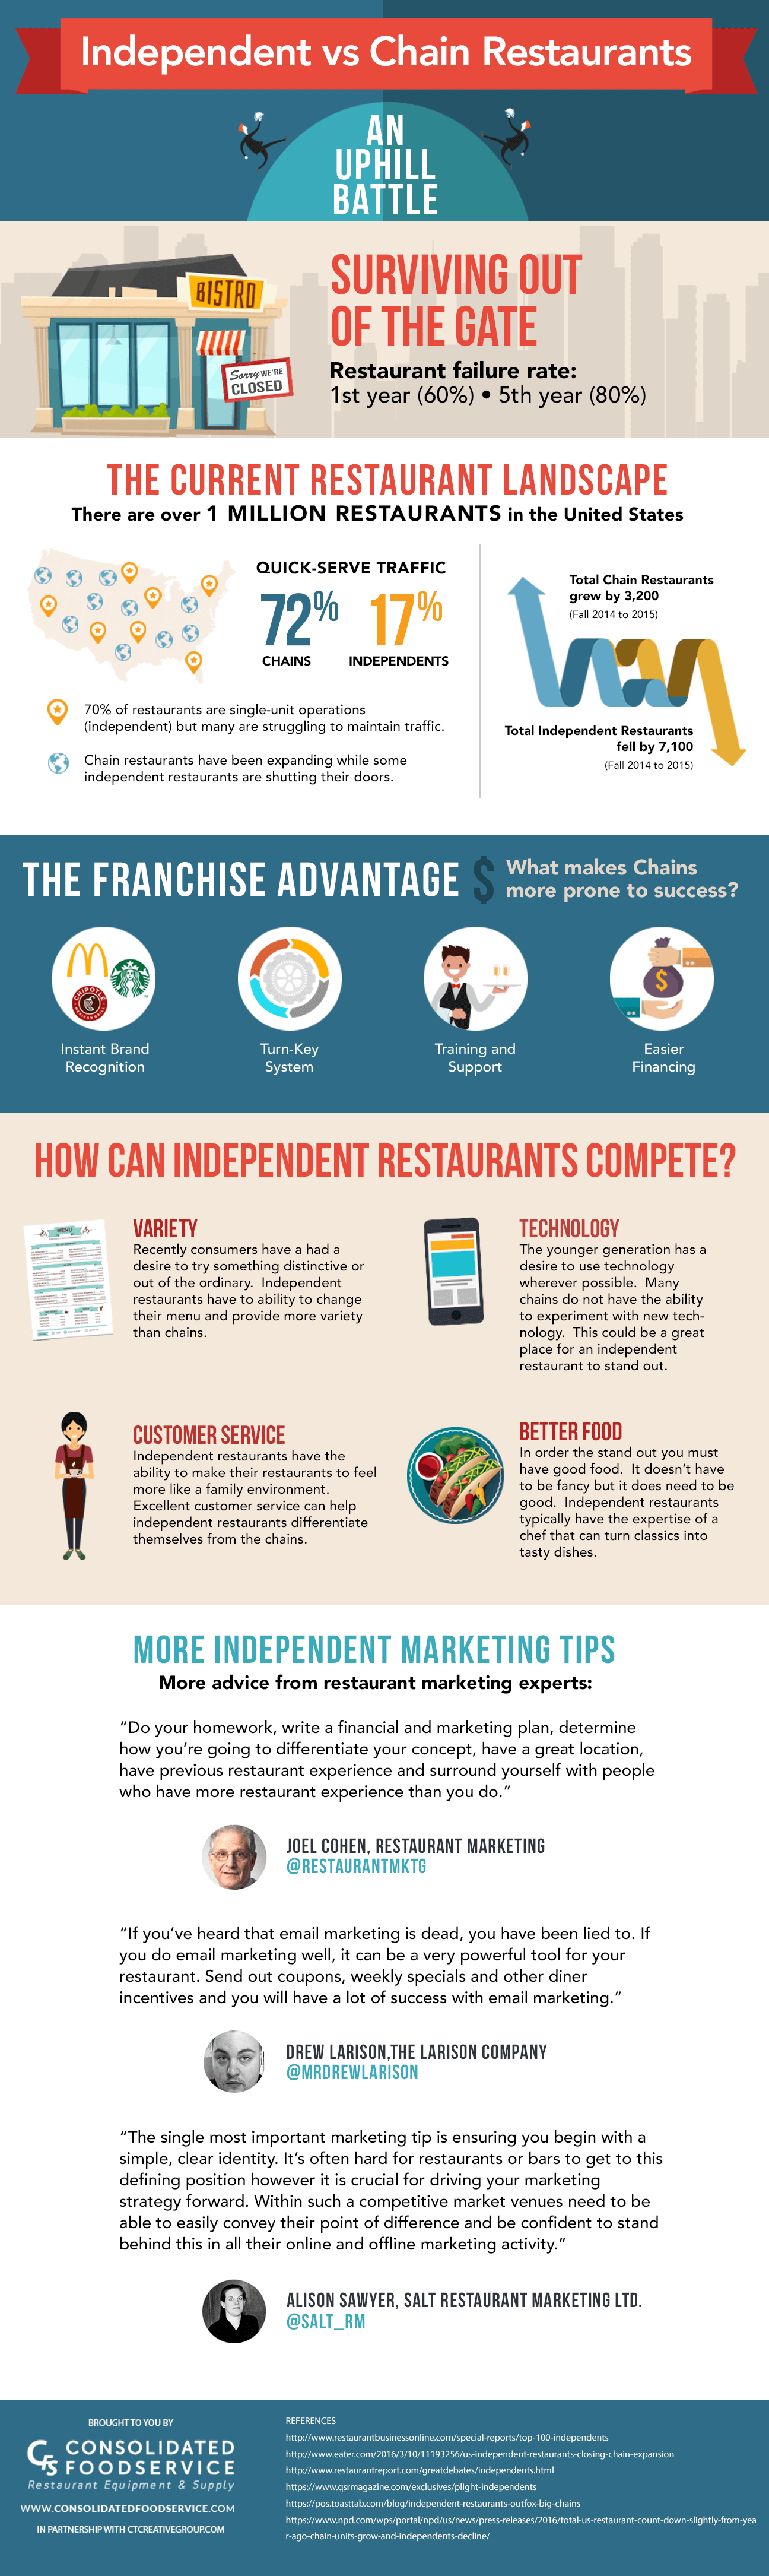 Independent vs Chain Restaurants Infographic